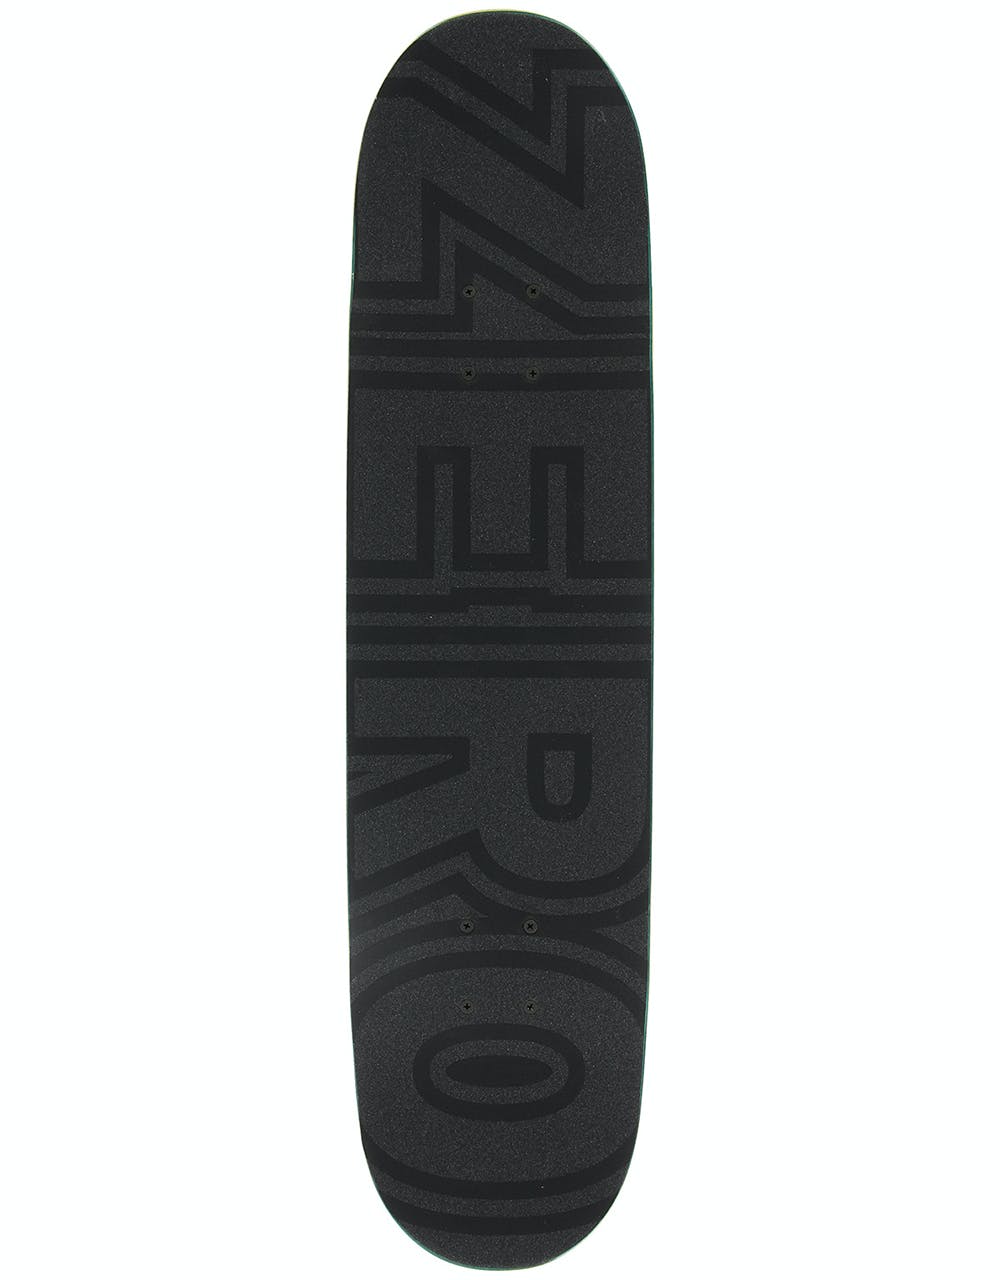 Zero Evil Eyes Complete Skateboard - 7.75"